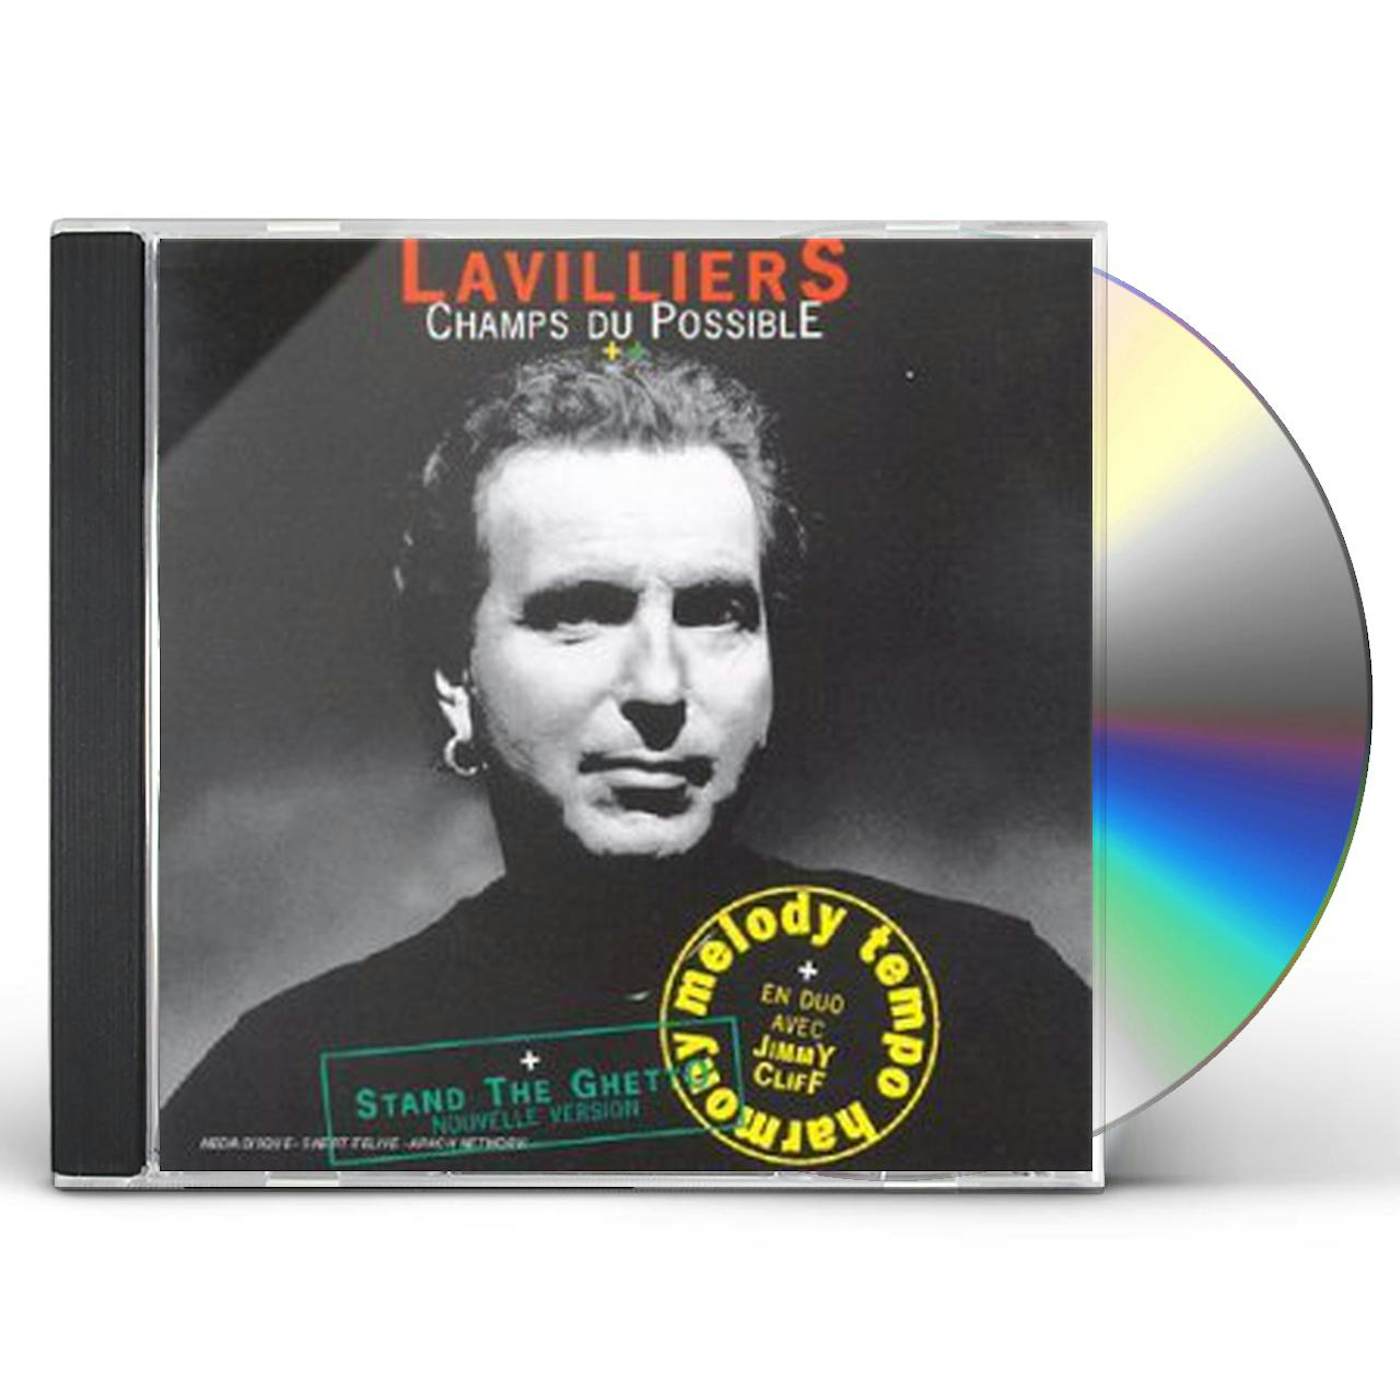 Bernard Lavilliers CHAMPS DU POSSIBLE CD